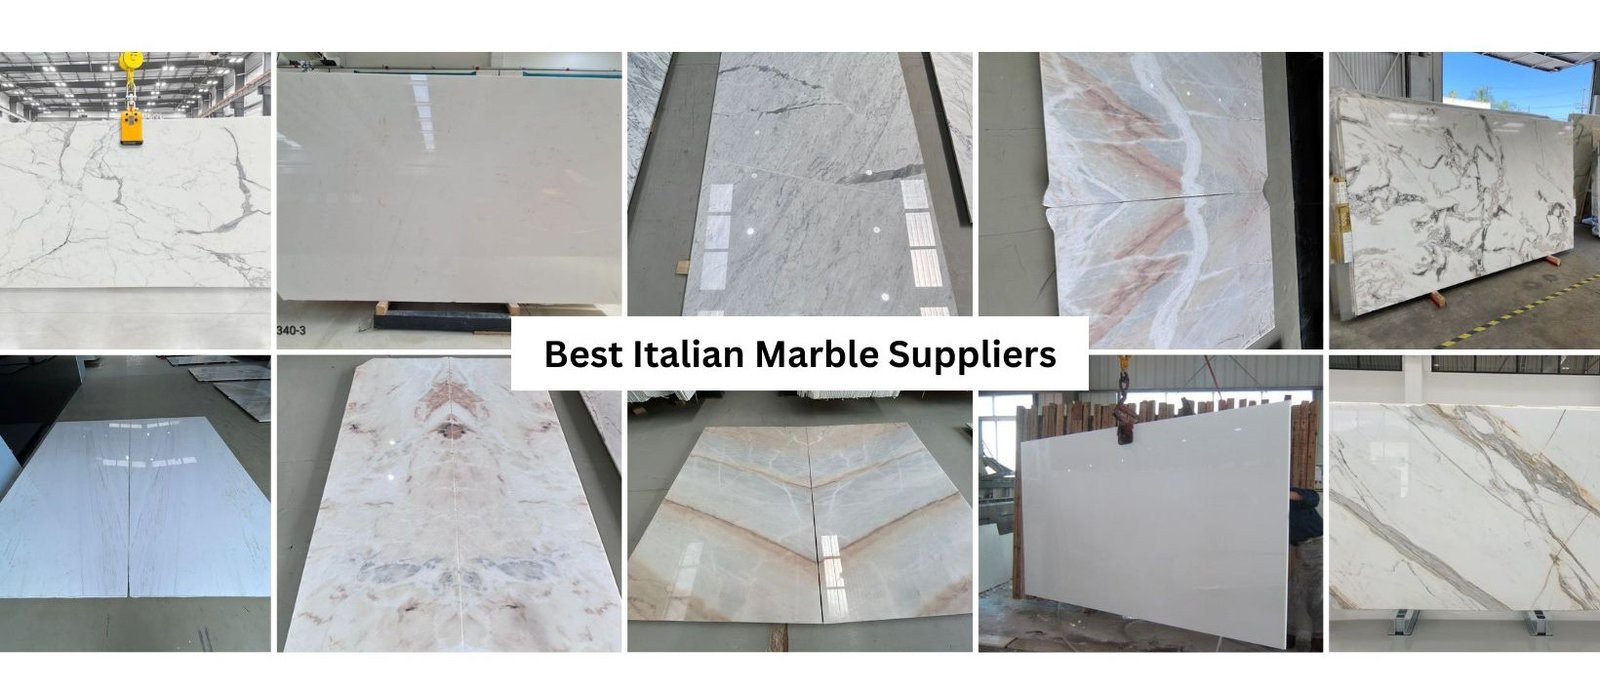 Best Italian Marble Suppliers in Delhi, Gurgaon, and Noida